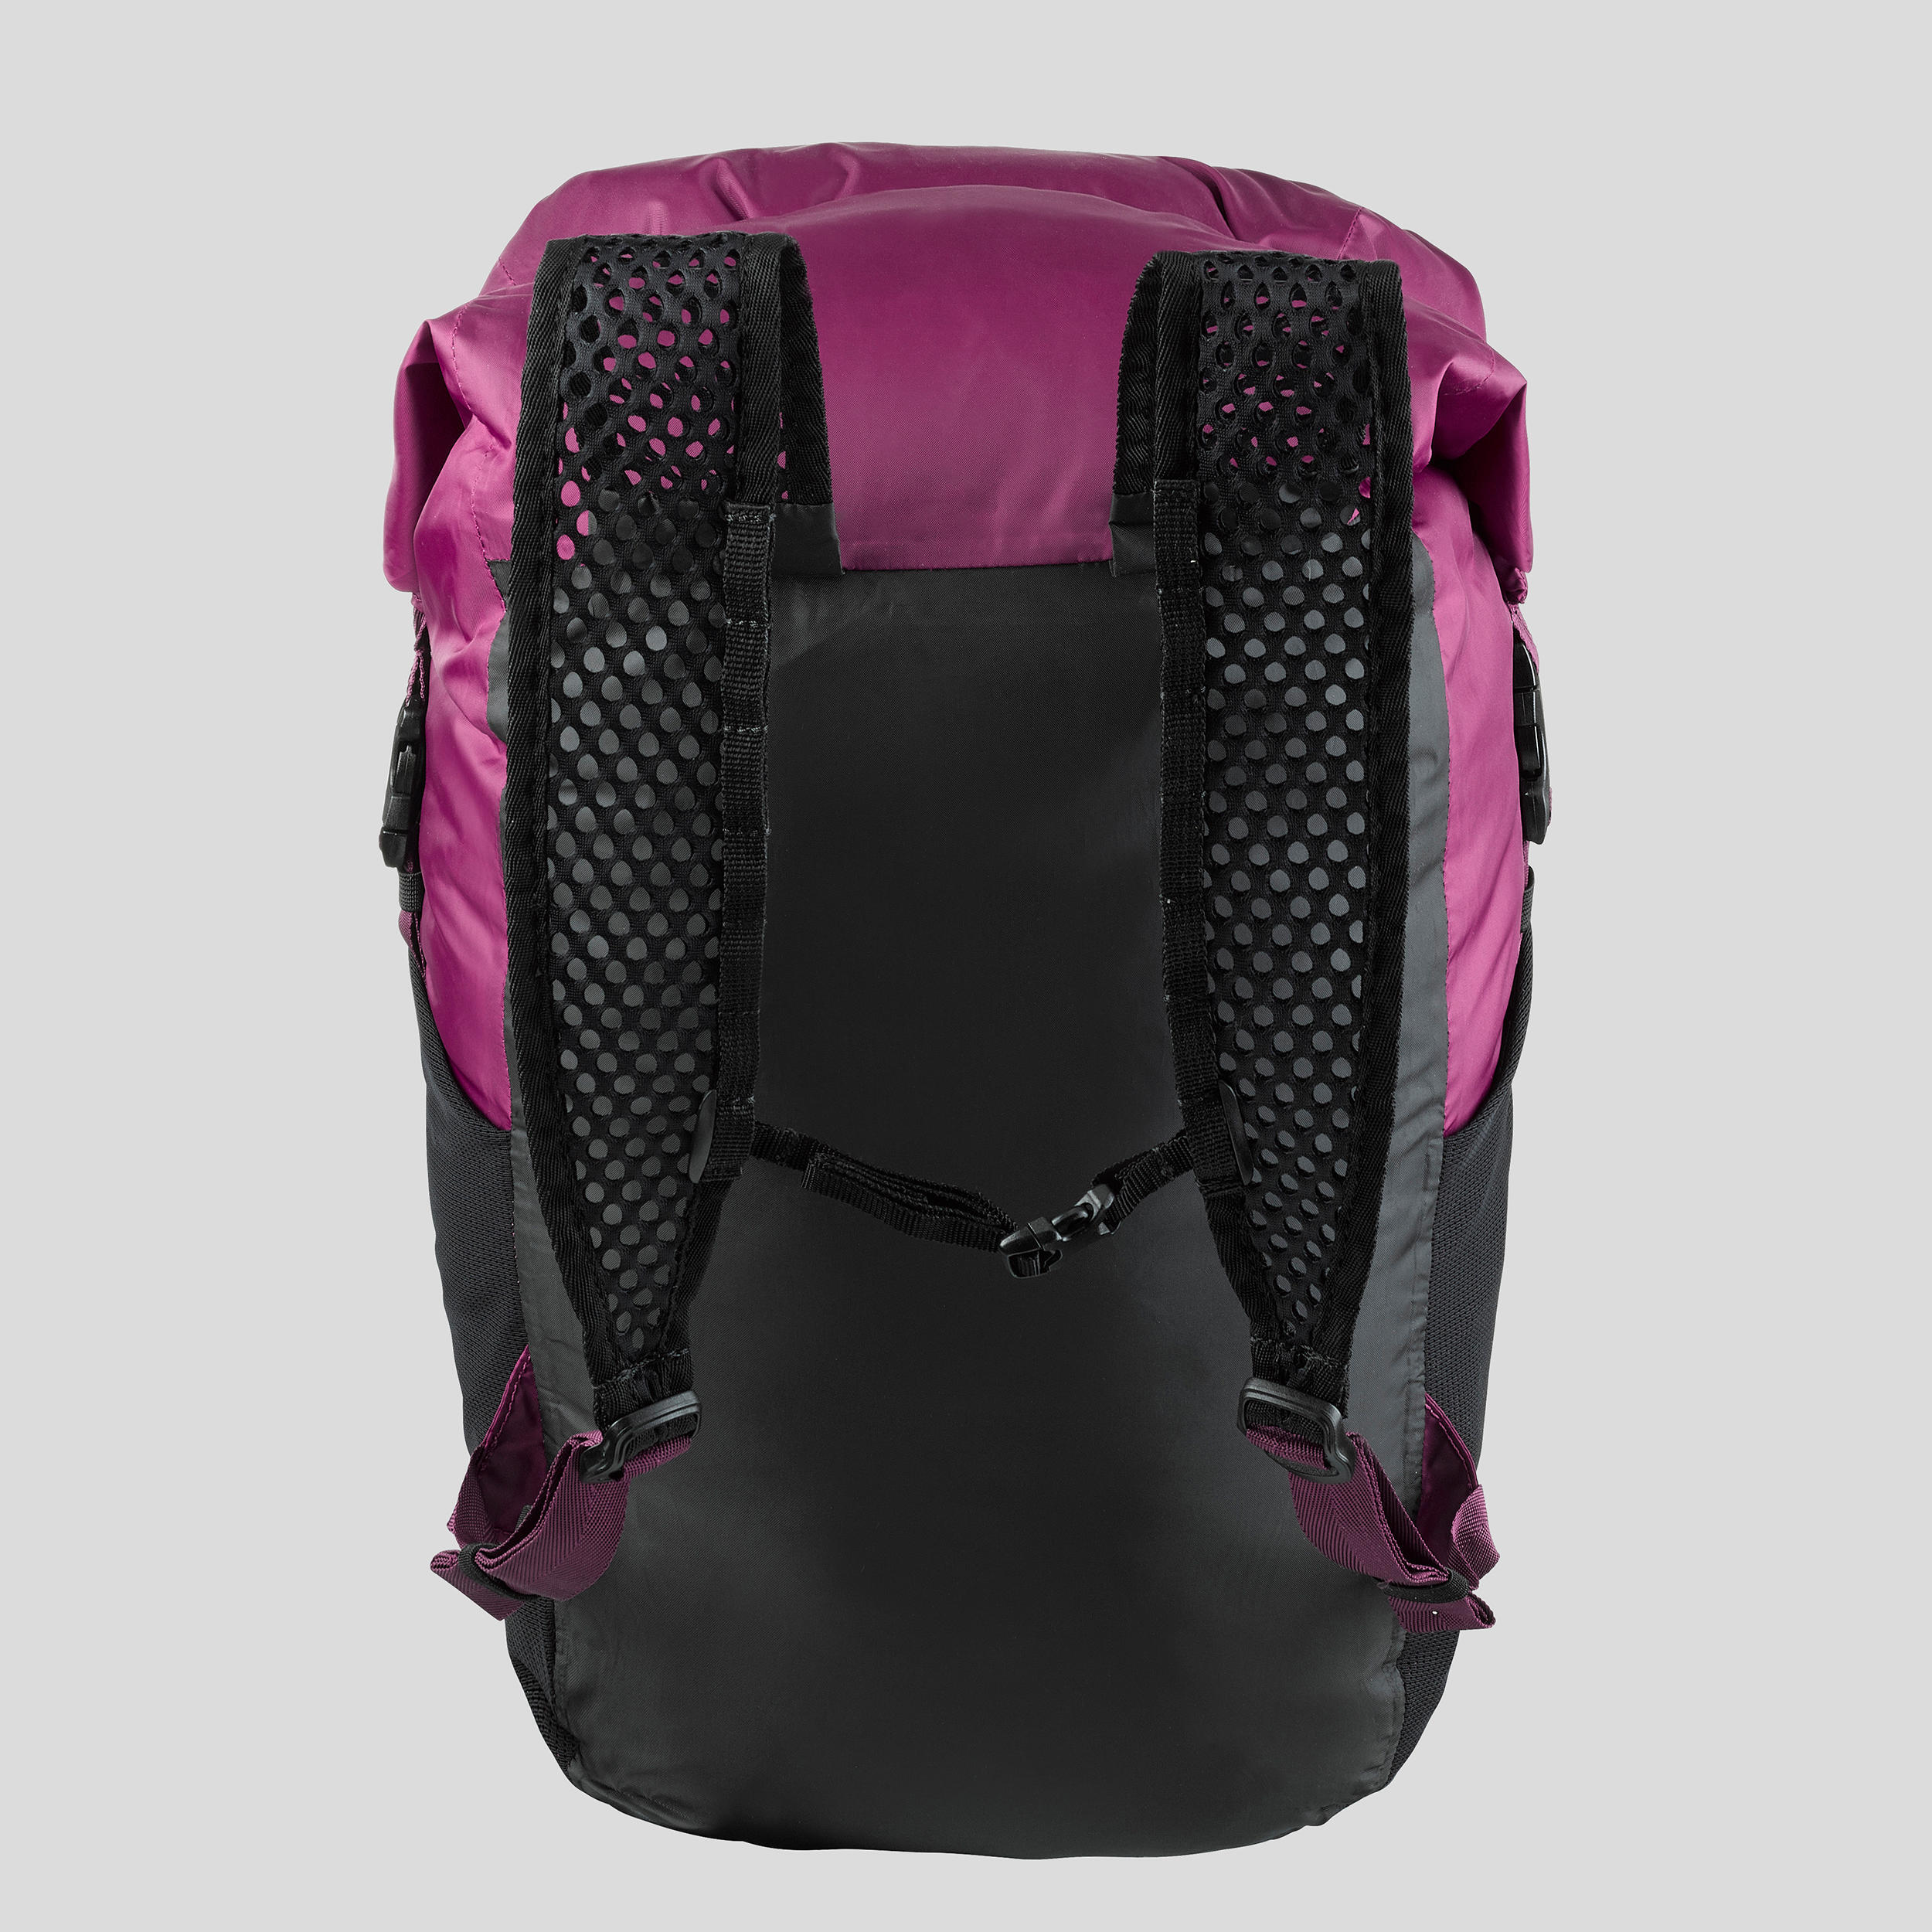 Waterproof foldable backpack 20L - Travel 4/8